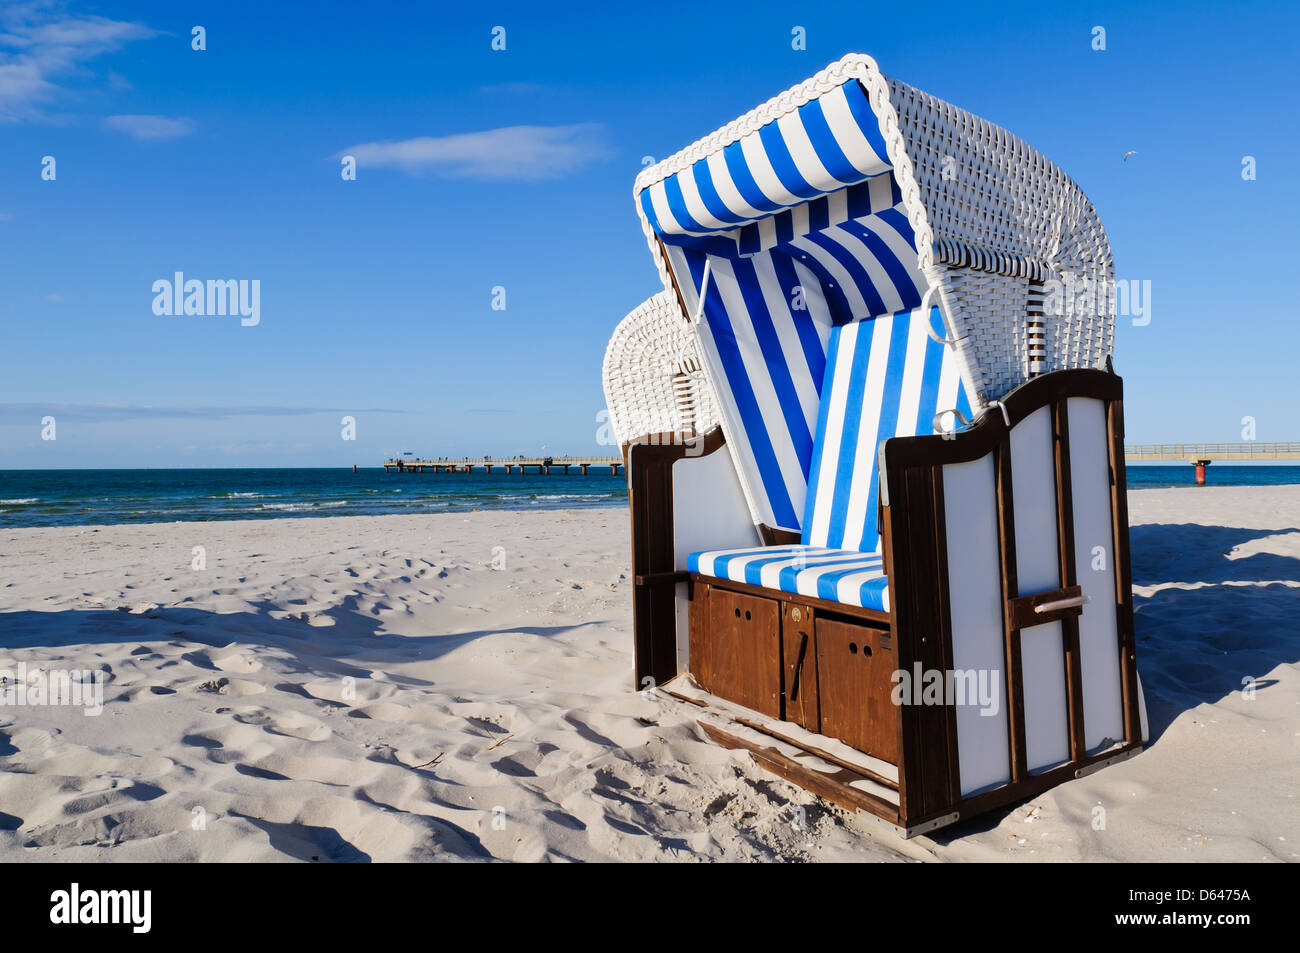 strandkorb (beach basket) in prerow at the baltic sea, germany Stock Photo